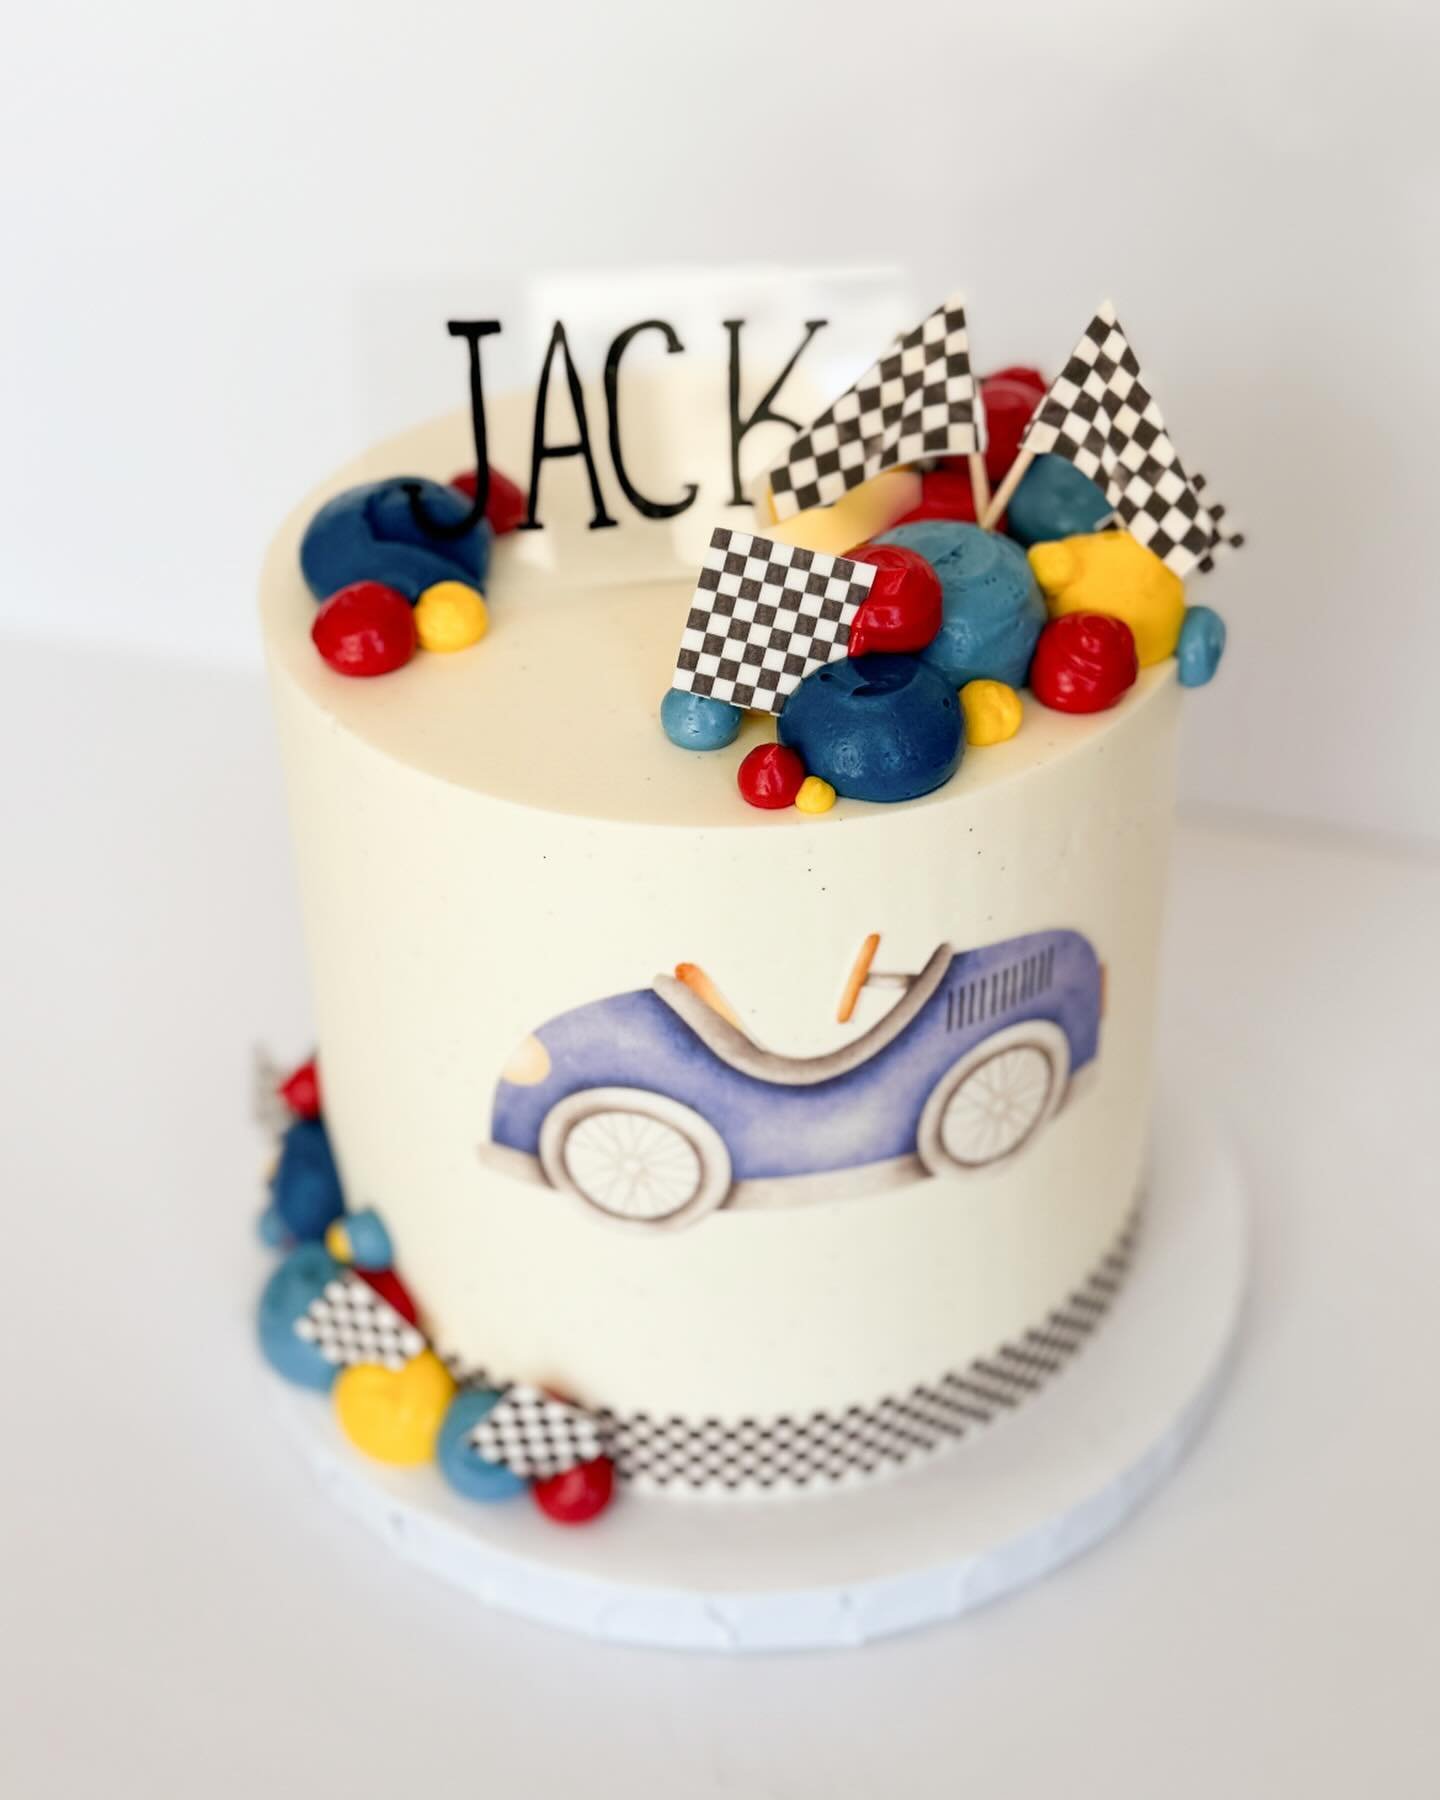 Sunday Drivers. 
.
.
.
#baking #dessert #cupcake #macarons #instagood #royalicing #cake #bakedgoods  #pastrychef #foodstyling #picoftheday #cutecake #ganache #thatsdarling #buttercream #bakery #justbaked #chef #desserttable #buttercream #sugarcookie 